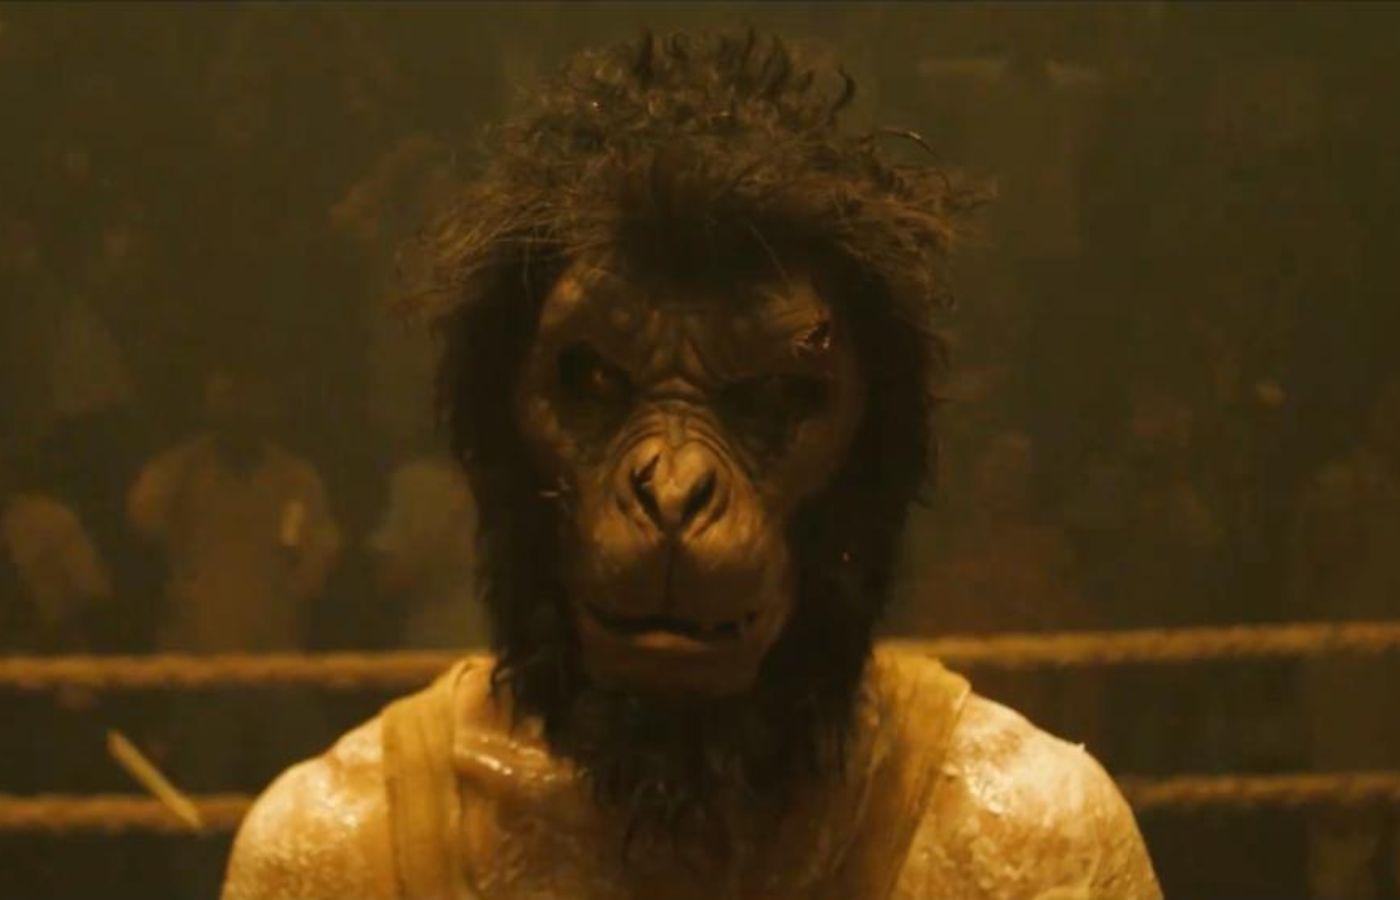 A still from the Monkey Man trailer, starring Dev Patel